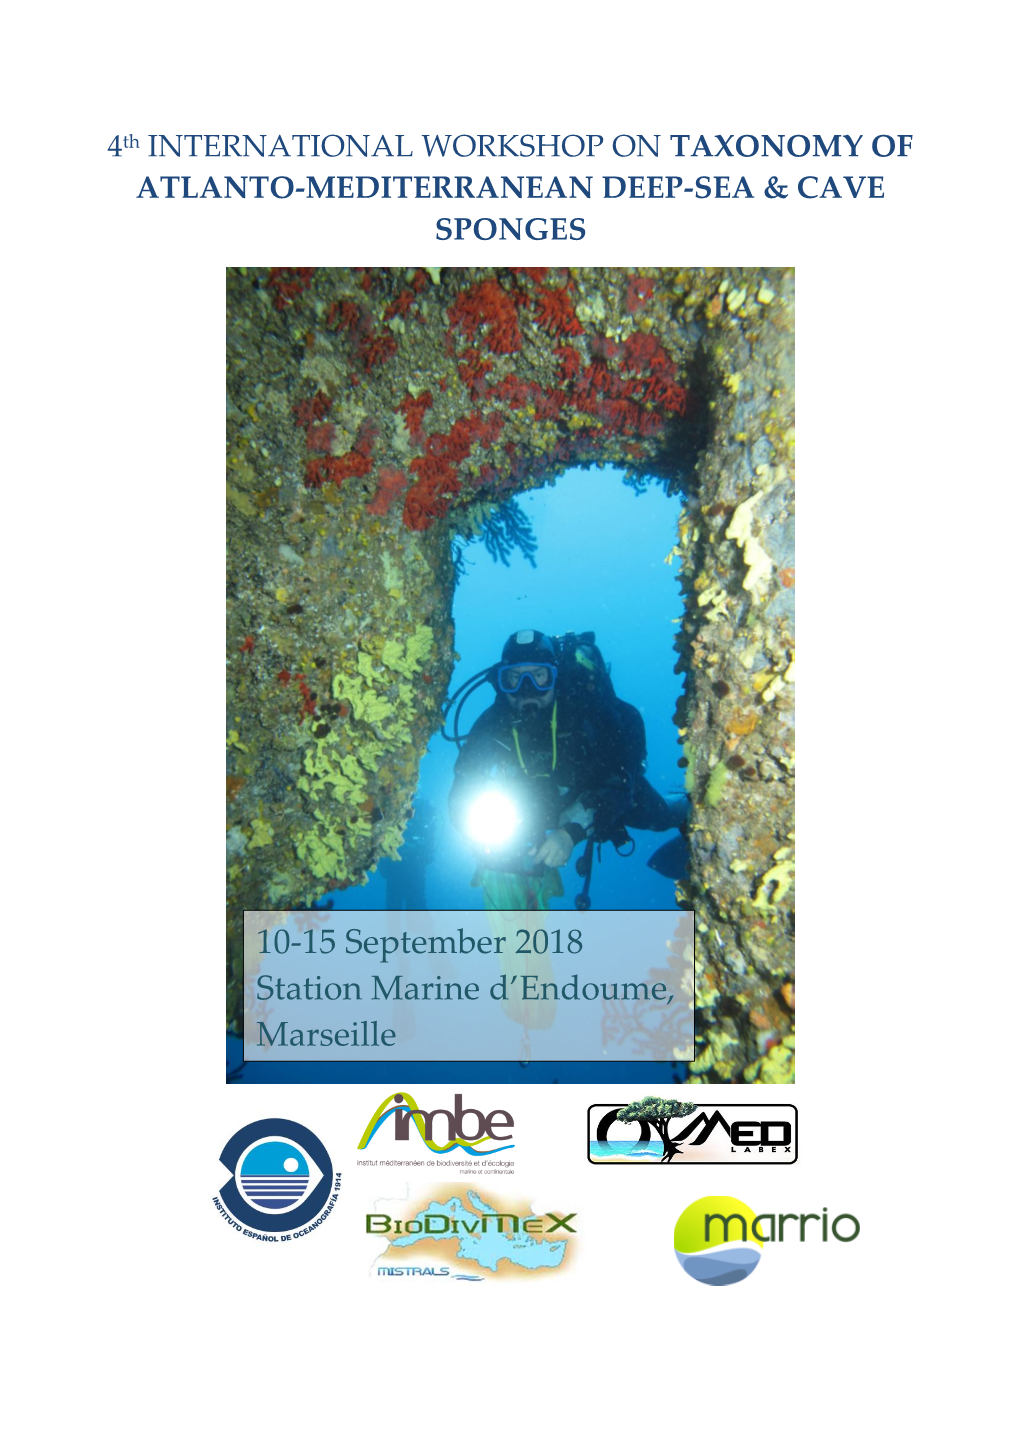 4Th INTERNATIONAL WORKSHOP on TAXONOMY of ATLANTO-MEDITERRANEAN DEEP-SEA & CAVE SPONGES